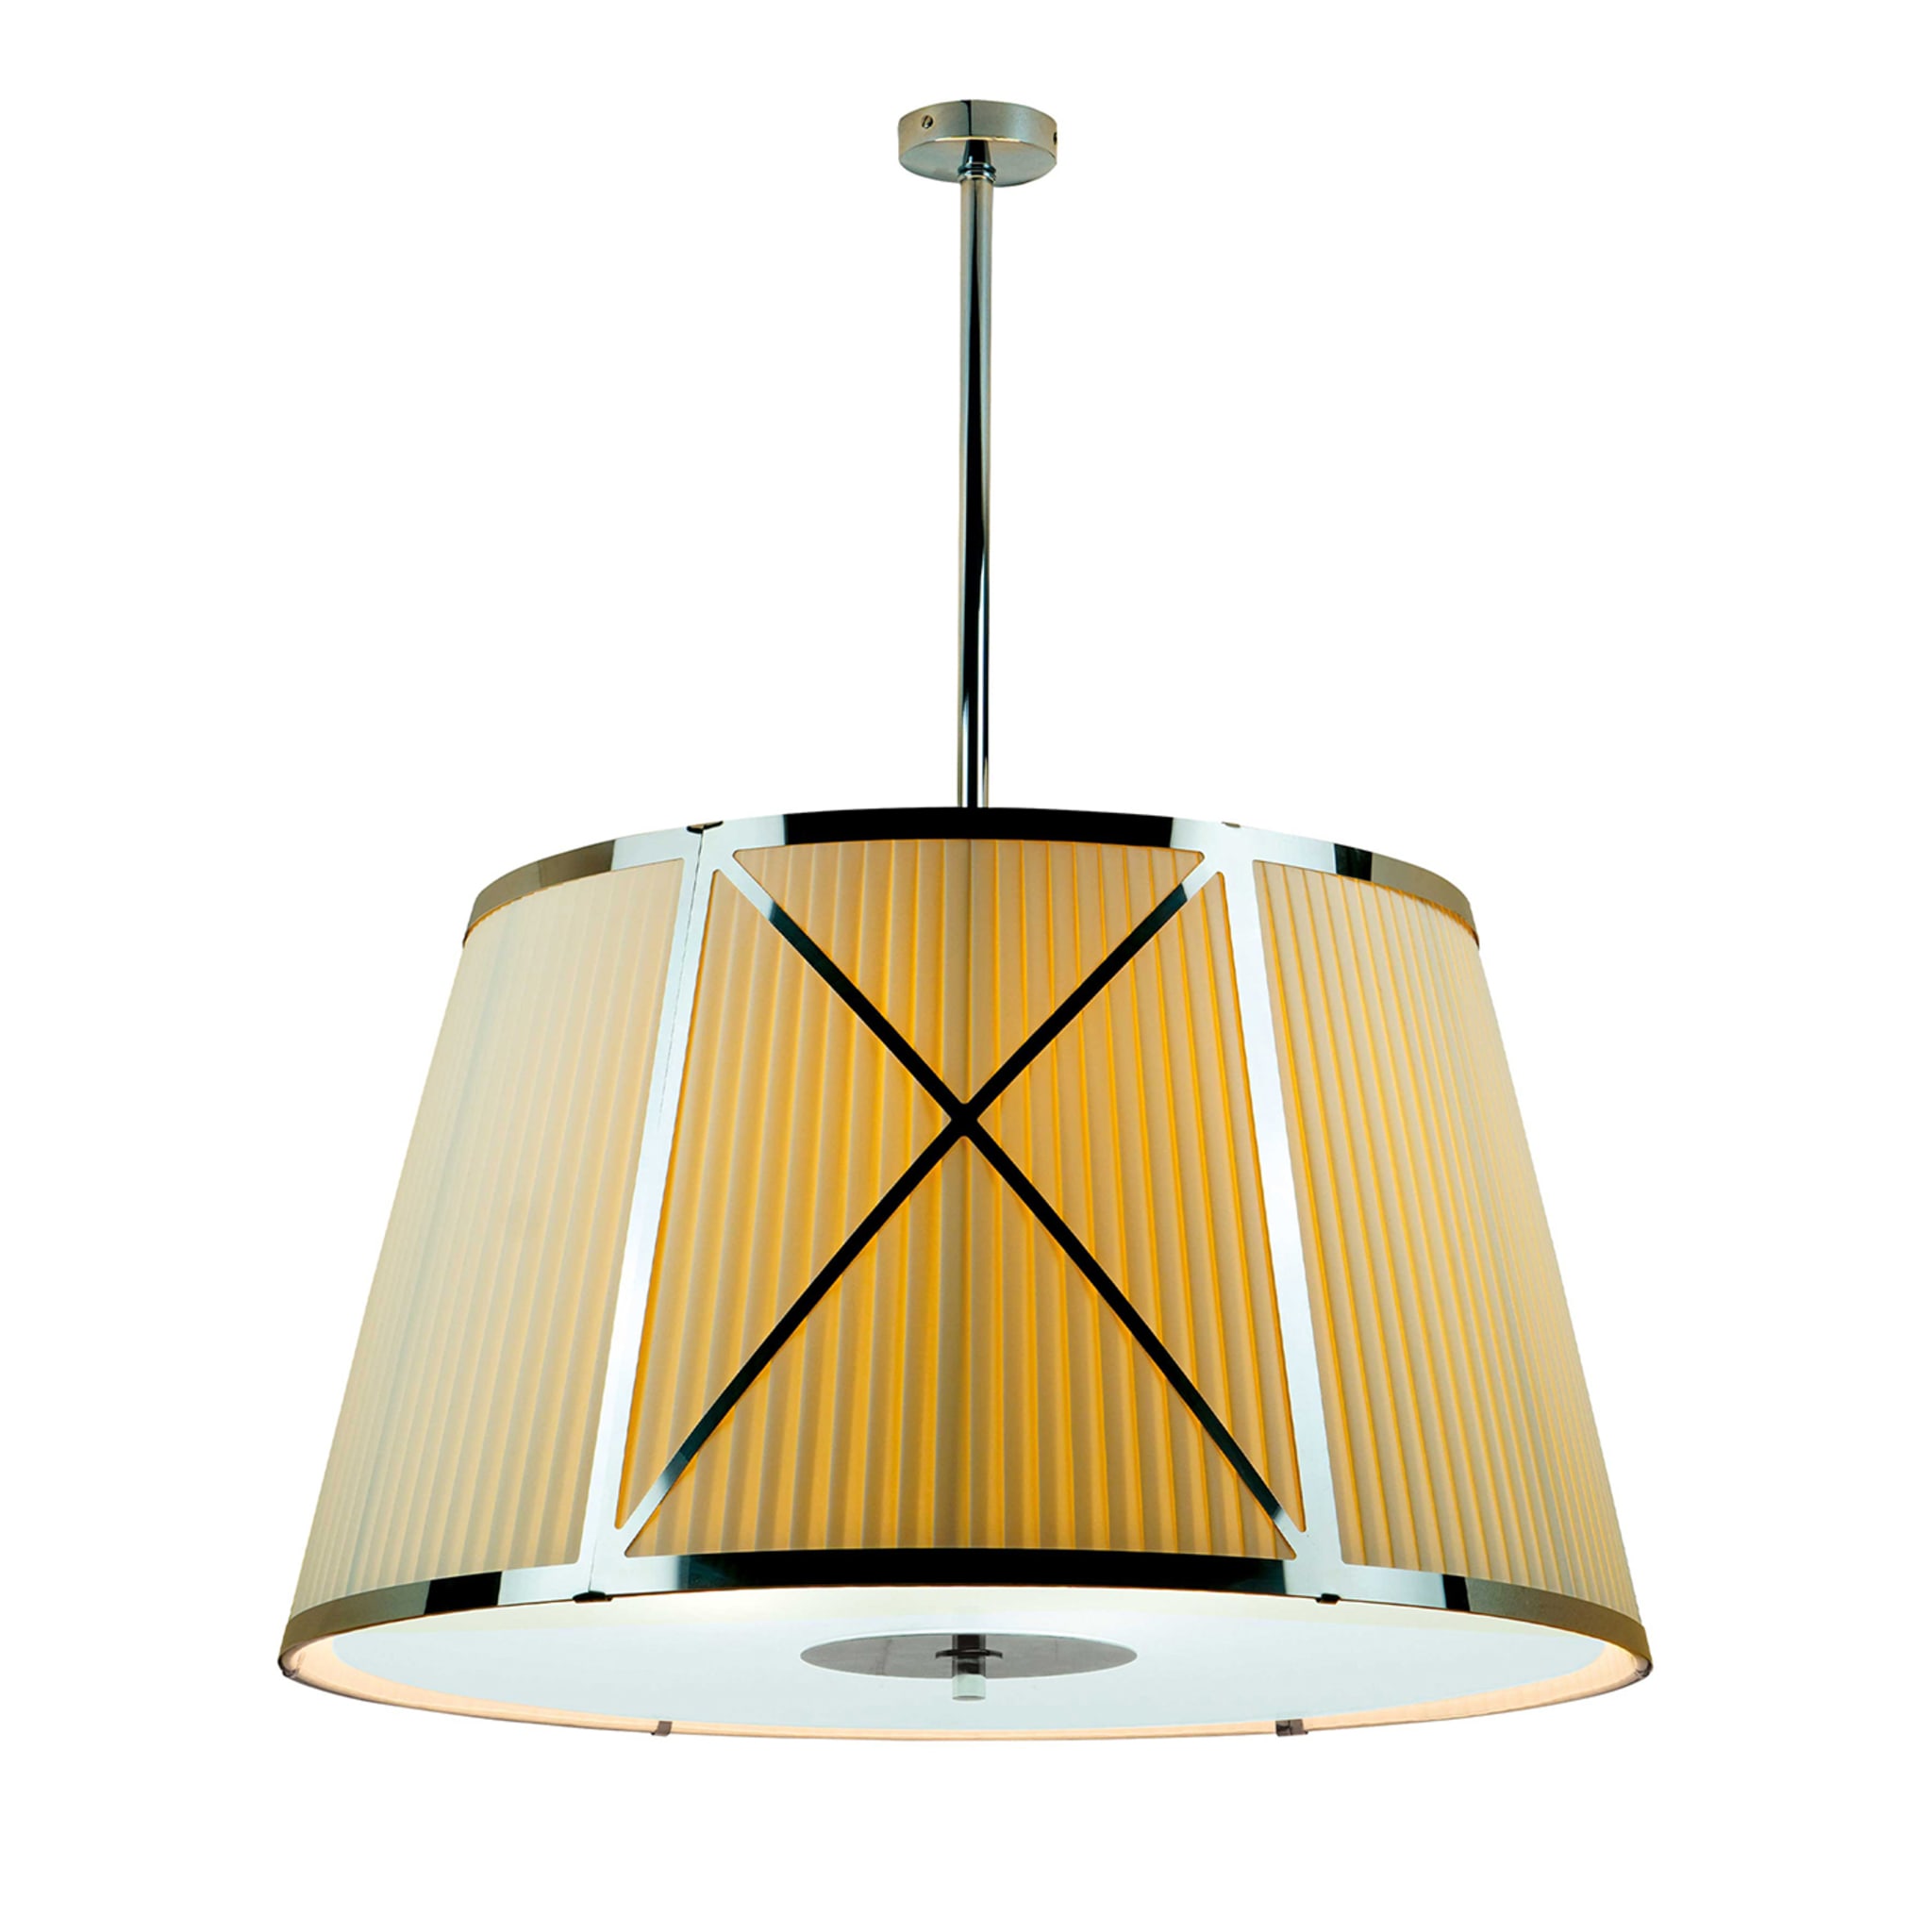 Panarea 674 4-Light Pendant Lamp by Studio J Project - Main view